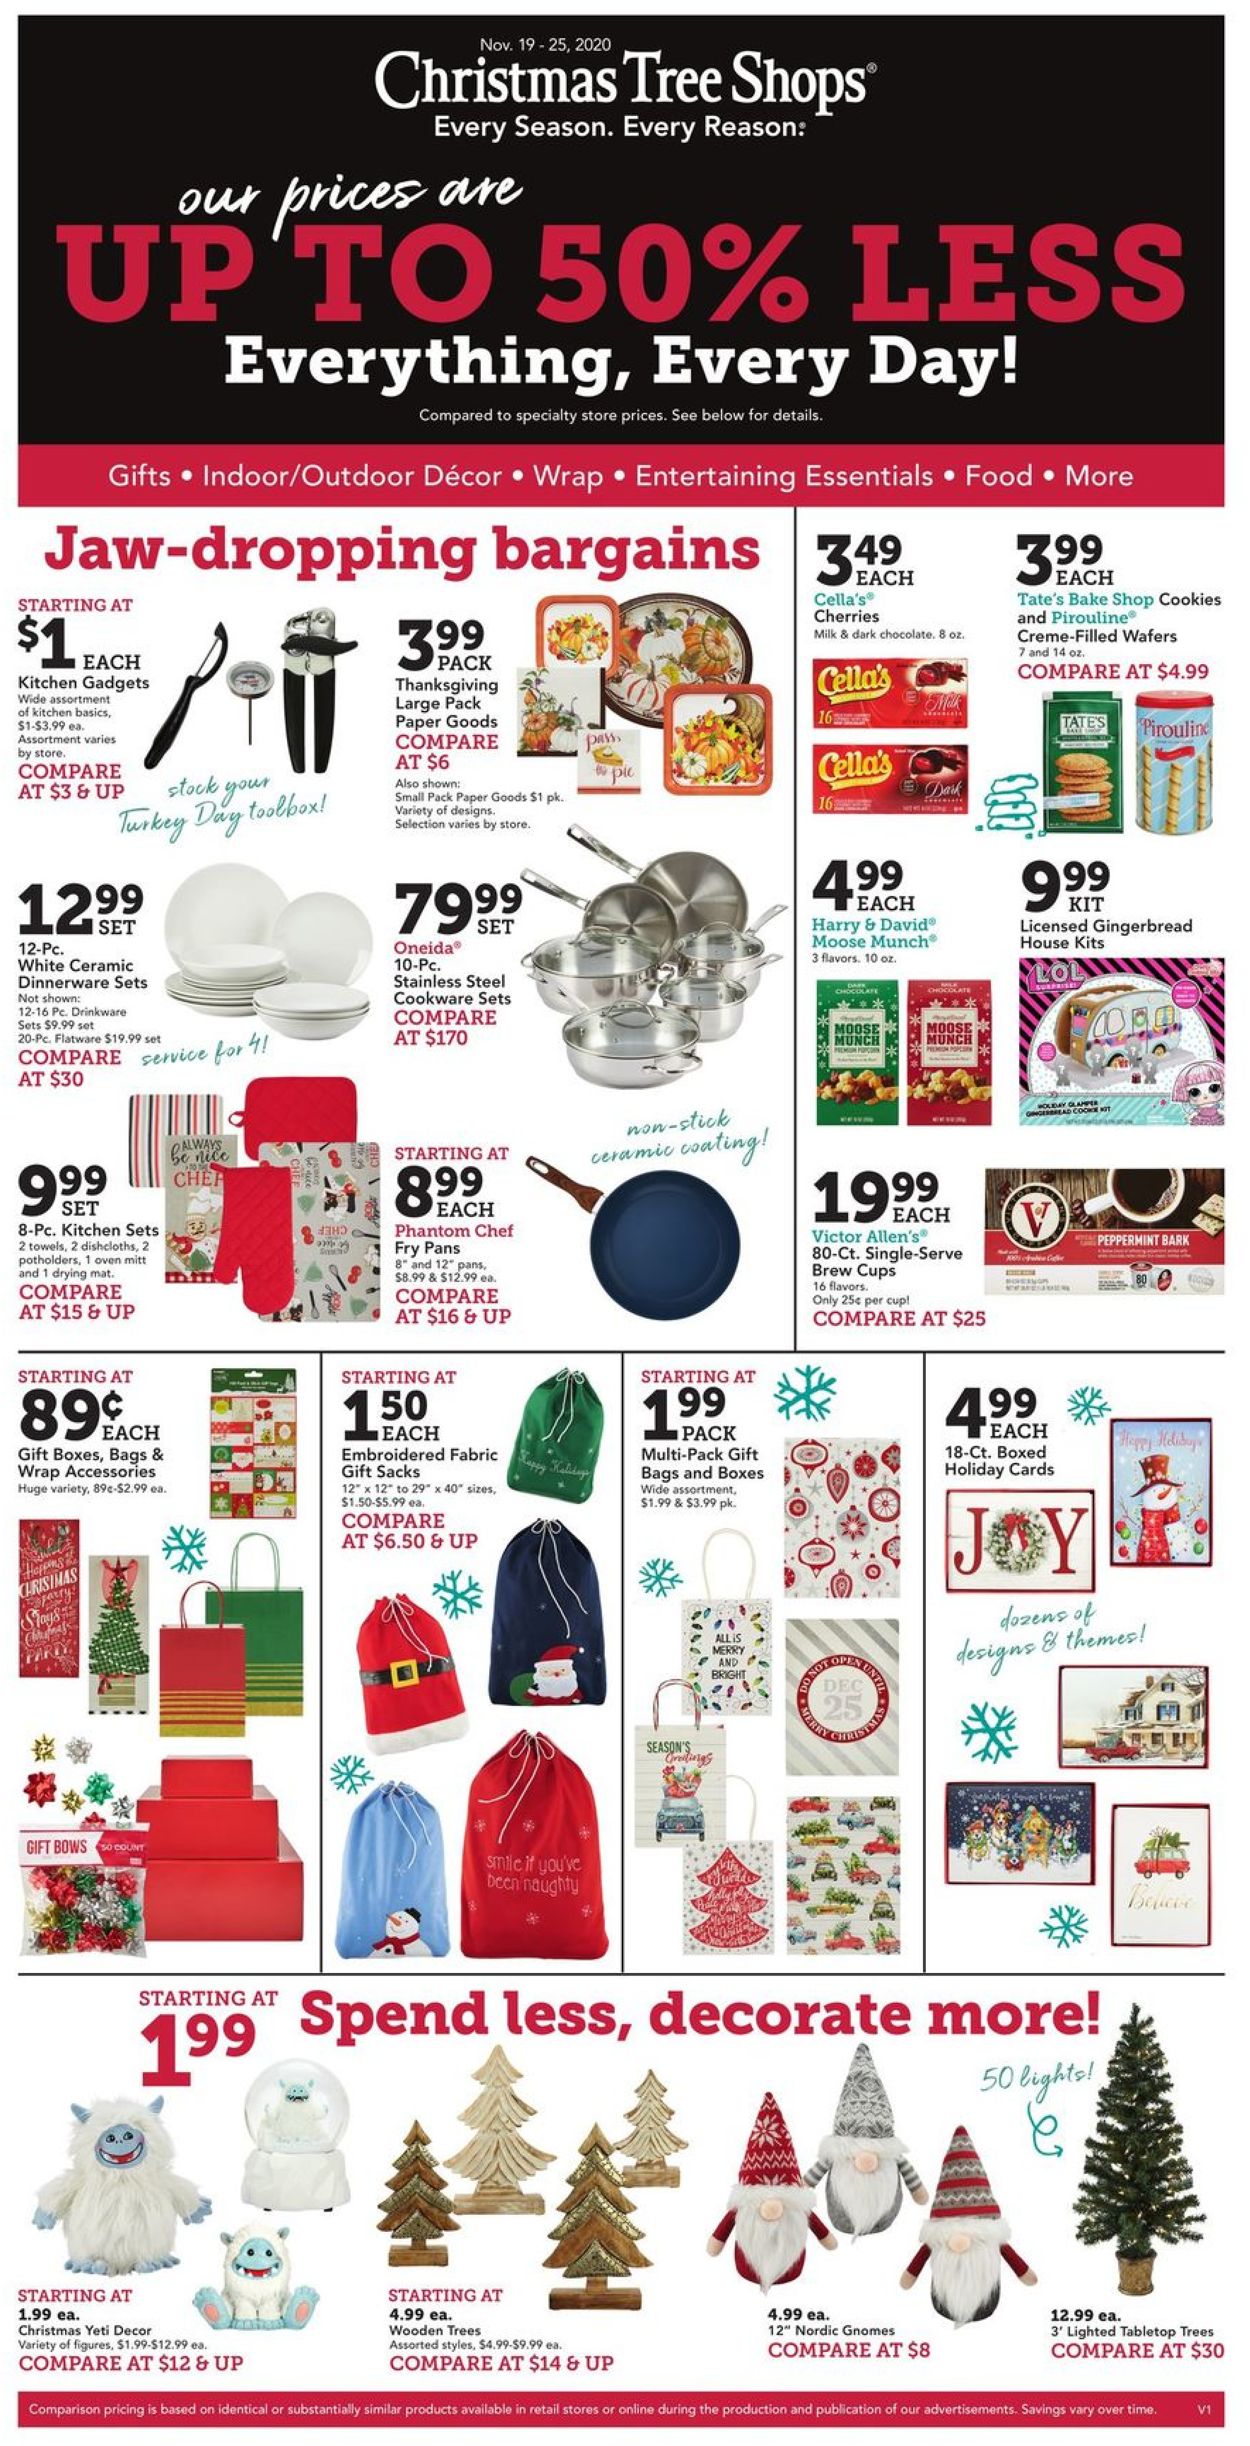 Catalogue Christmas Tree Shops Holiday ad 2020 from 11/19/2020